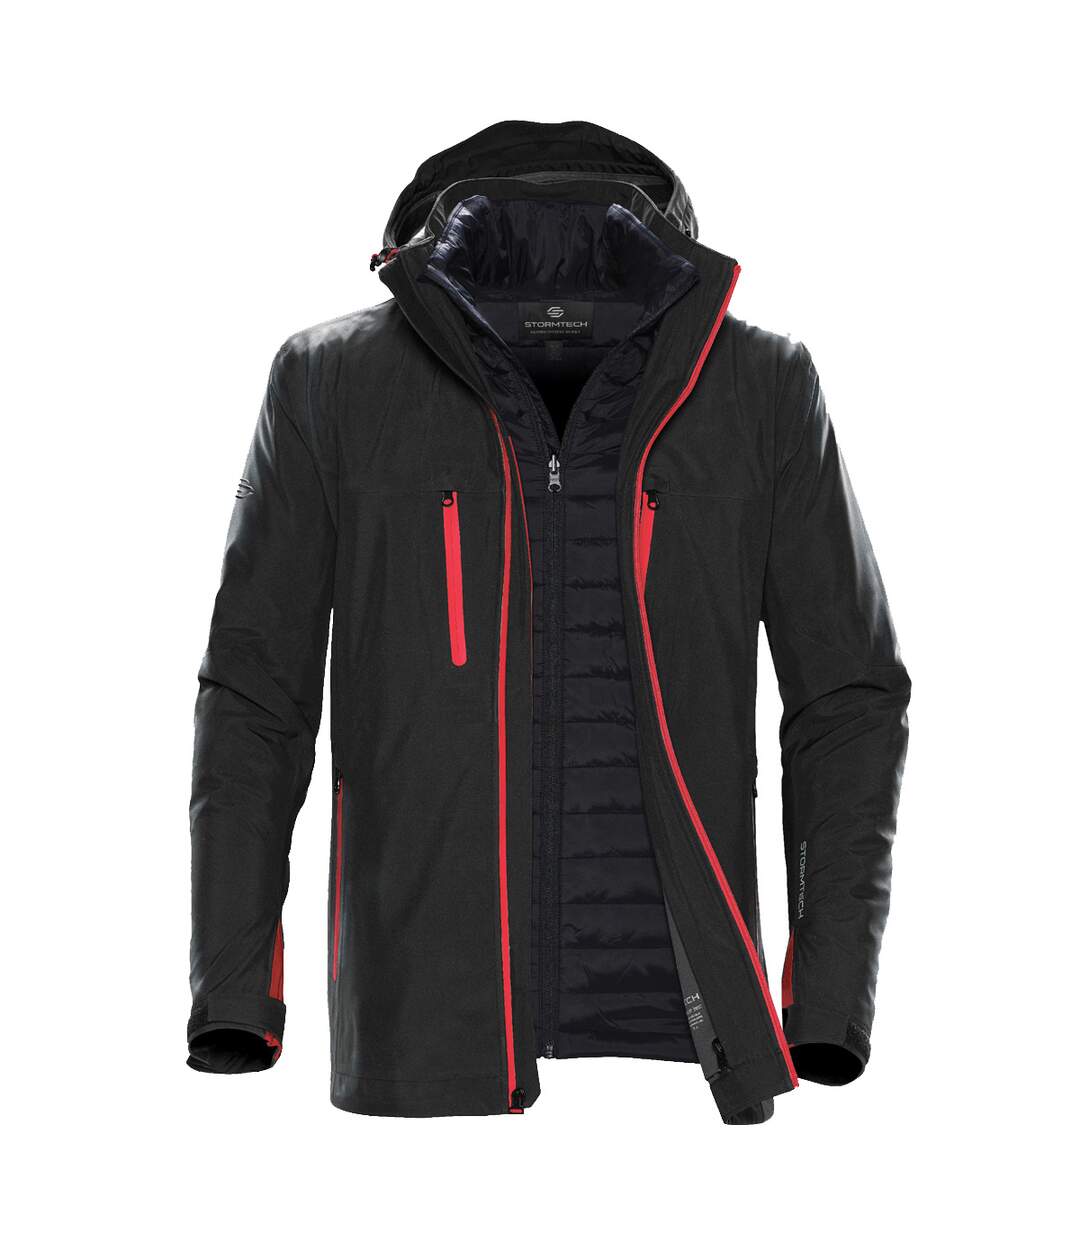 Stormtech Mens Matrix System Jacket (Black/Bright Red)